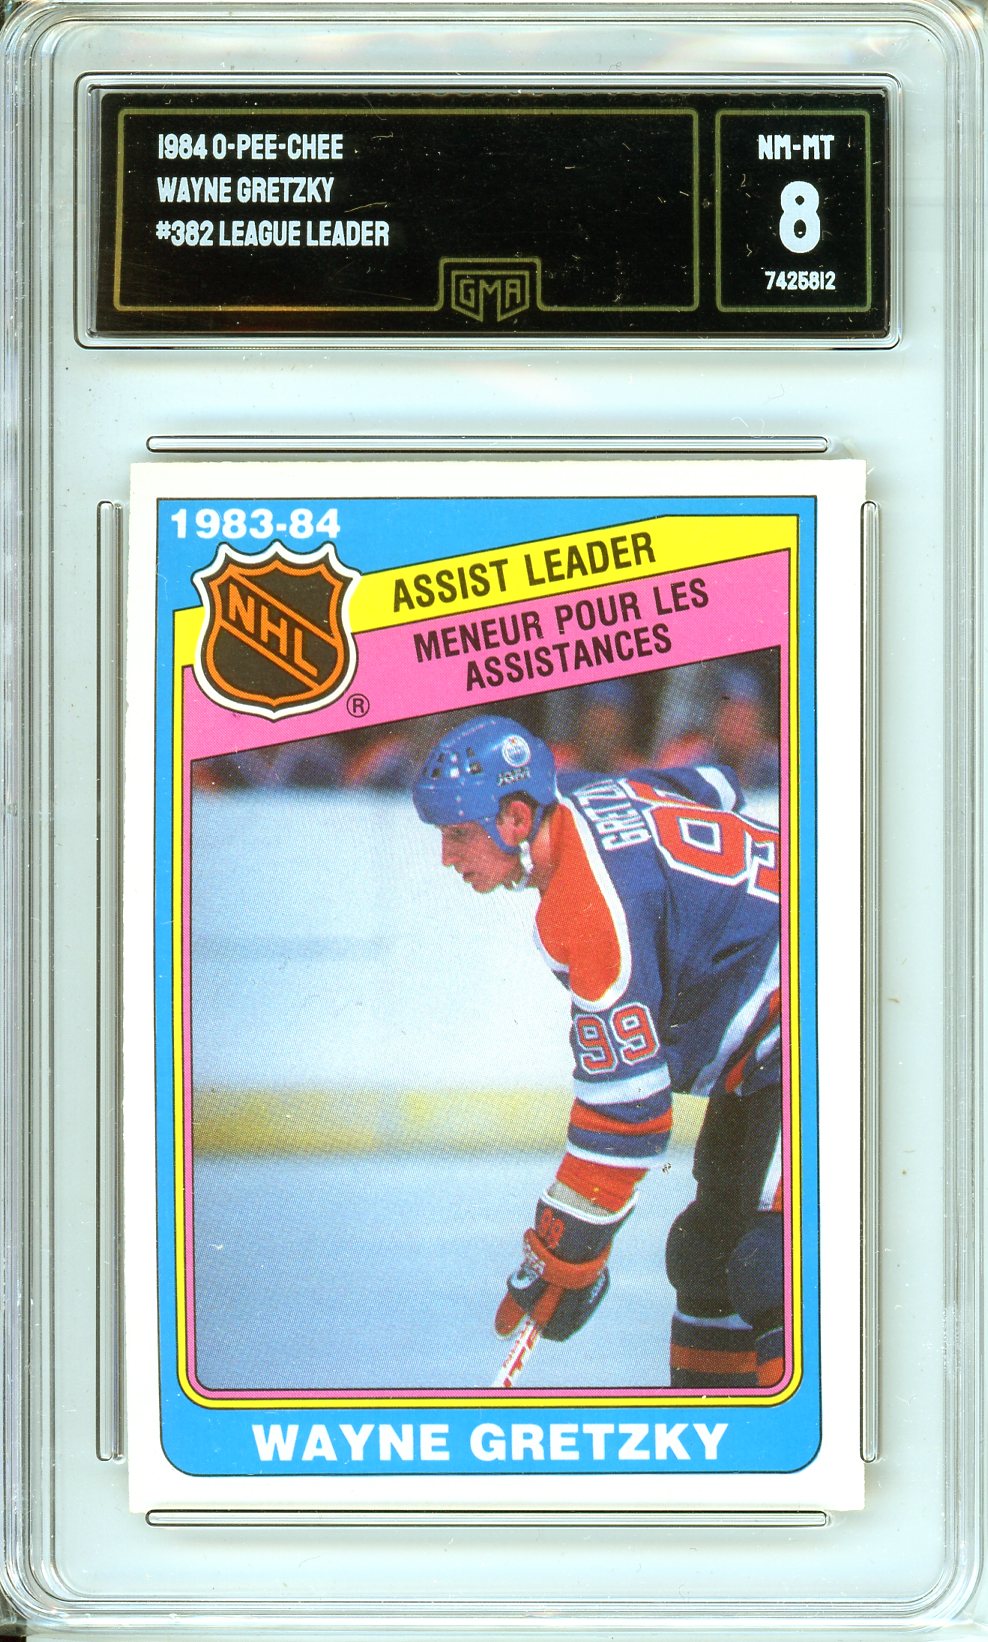 1984 OPC Wayne Gretzky #382 League Leader Card GMA 8